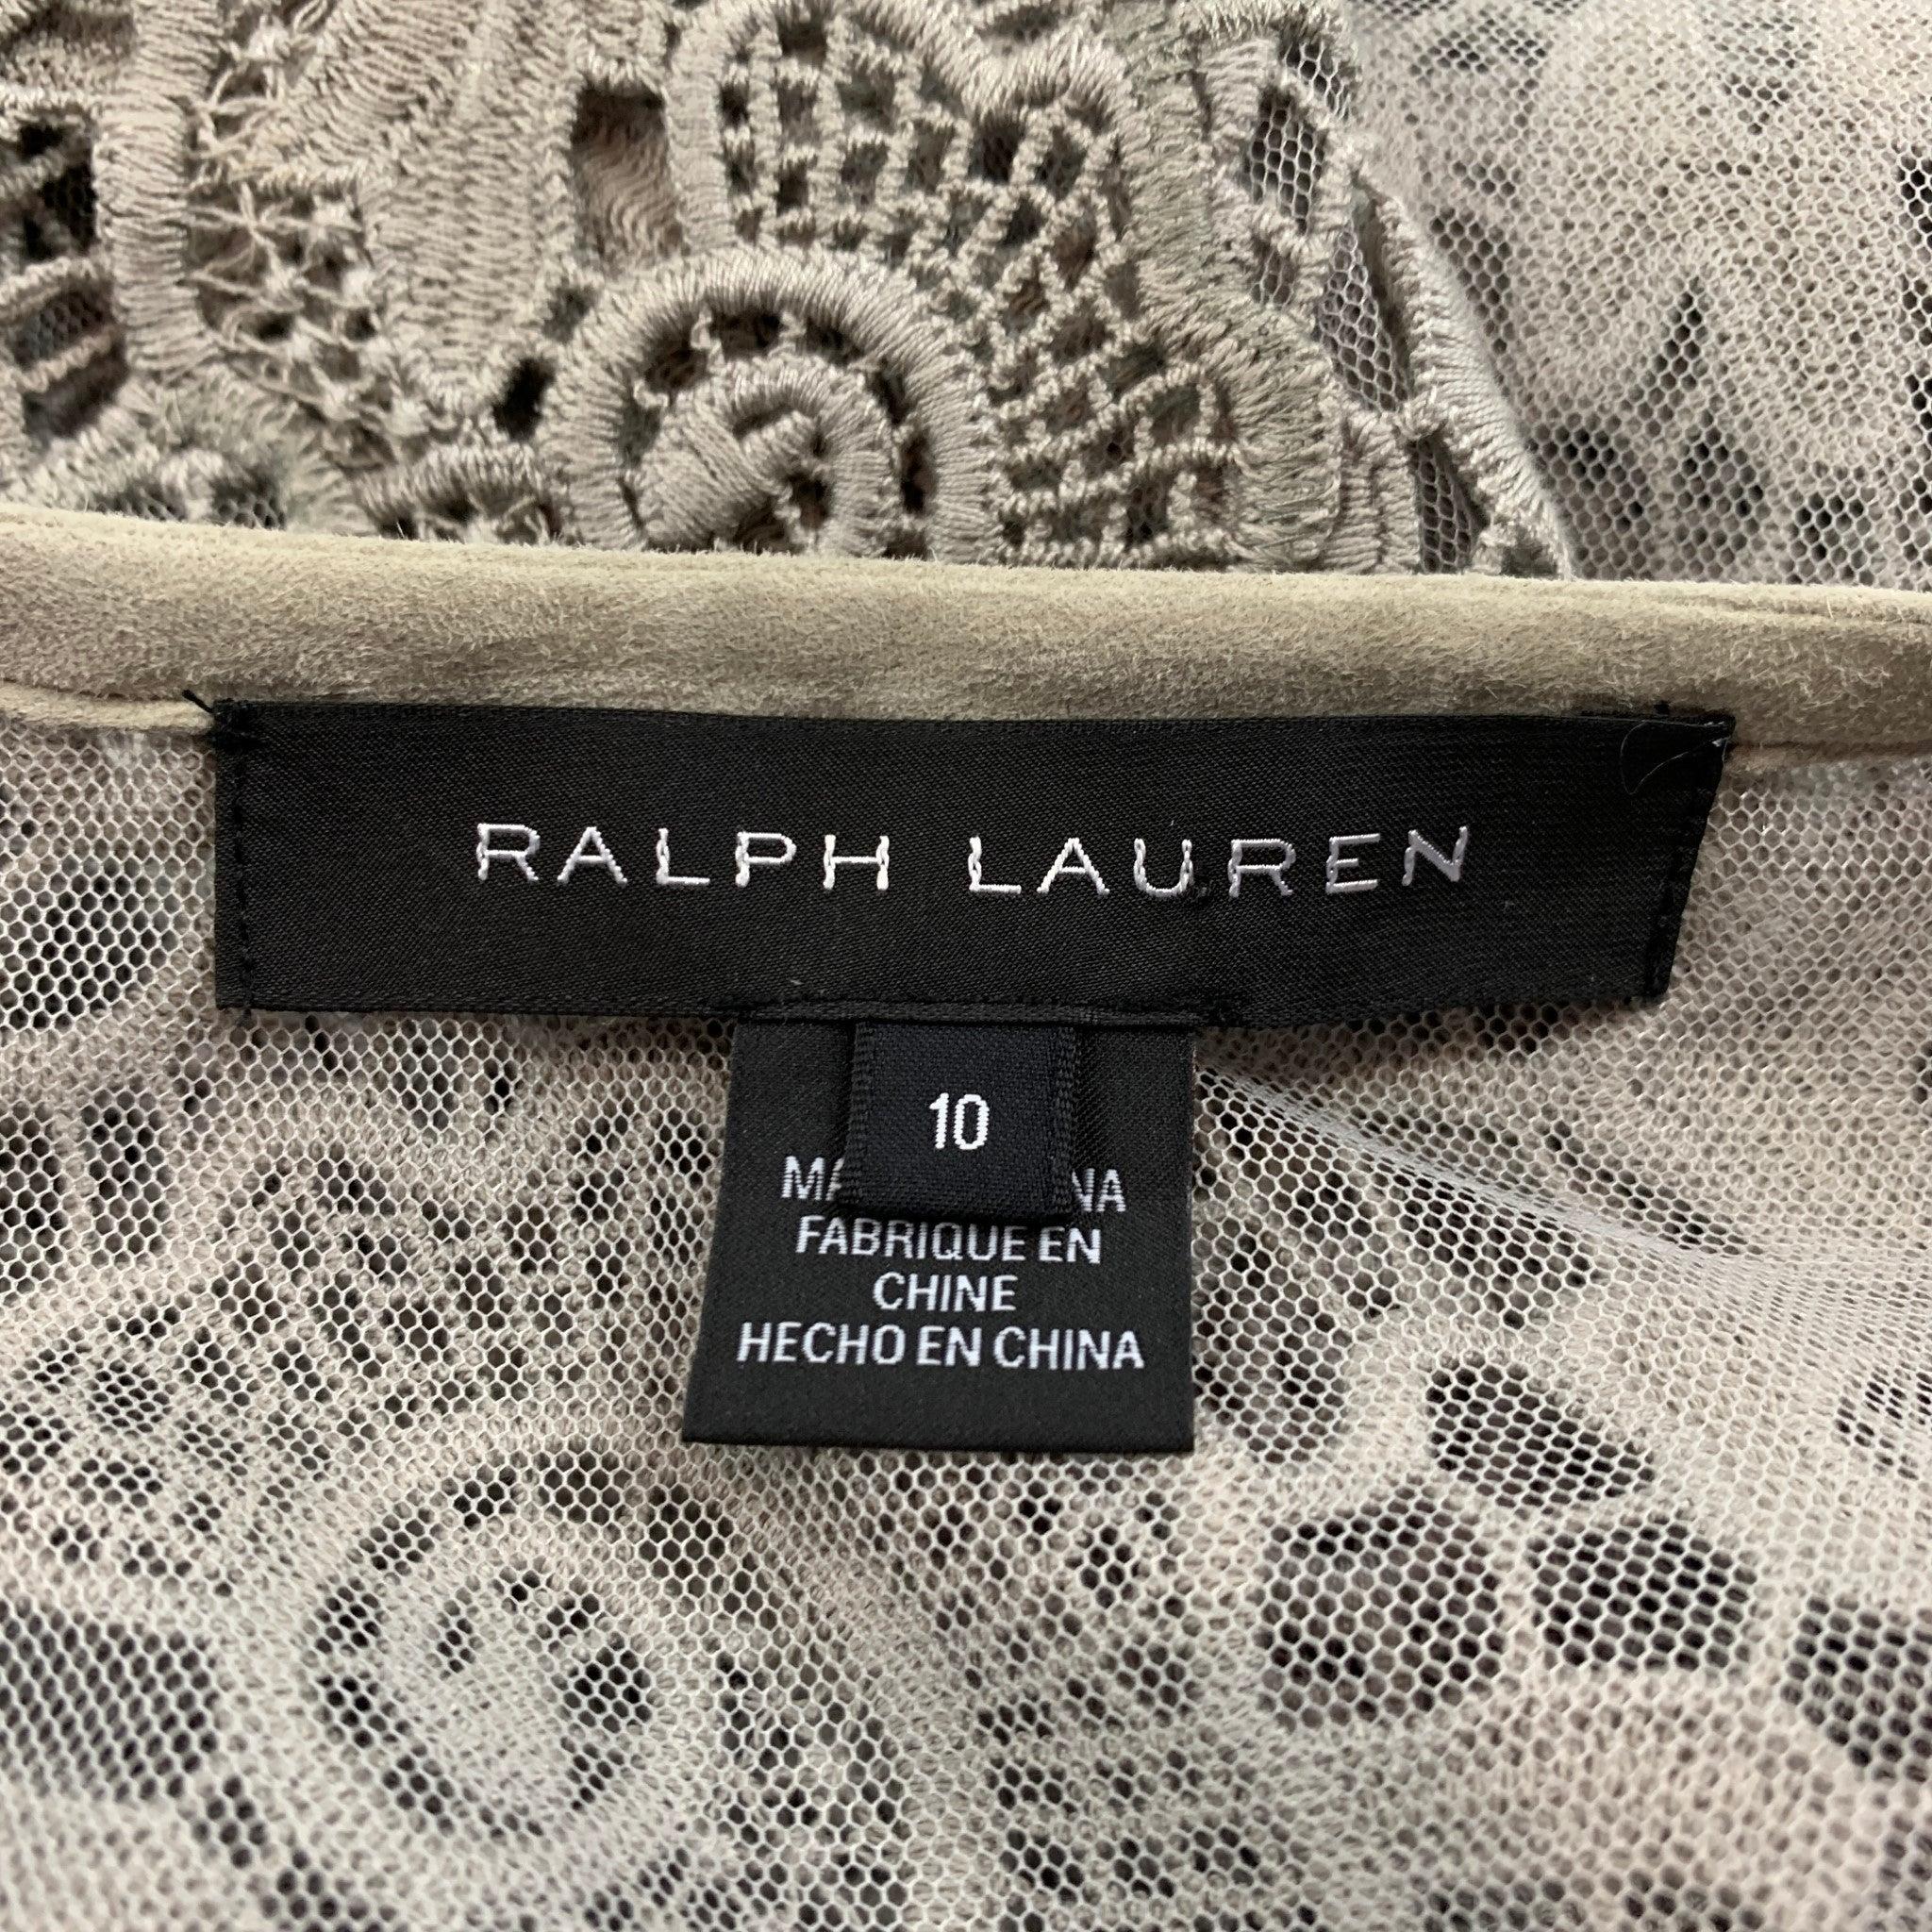 RALPH LAUREN Label Size 10 Light Gray Lace Textured Cotton Leather Trim Cardigan For Sale 2